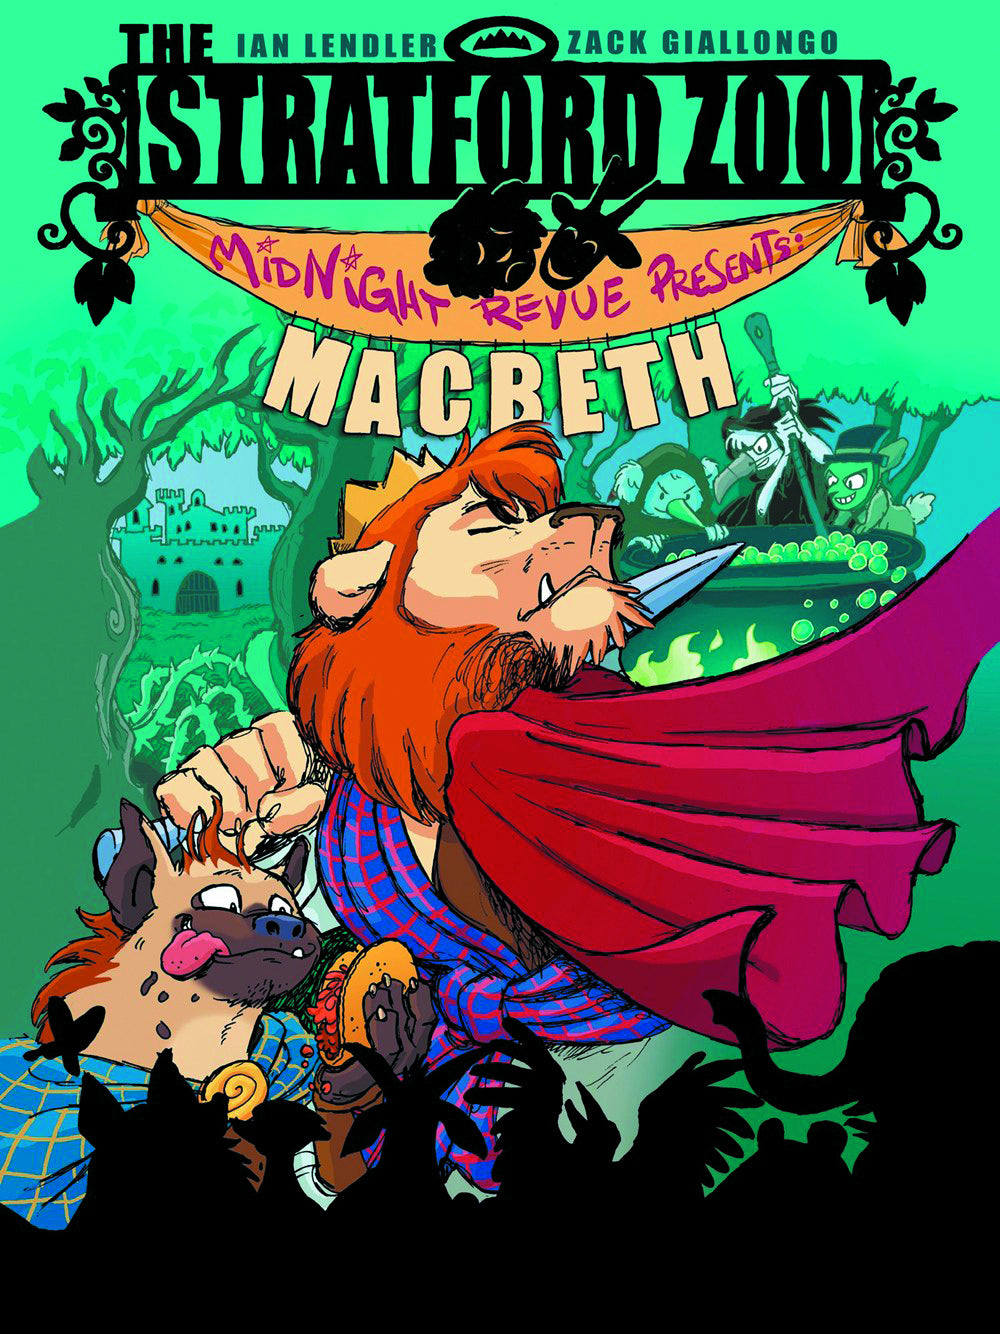 Stratford Zoo Midnight Revue Presents Macbeth